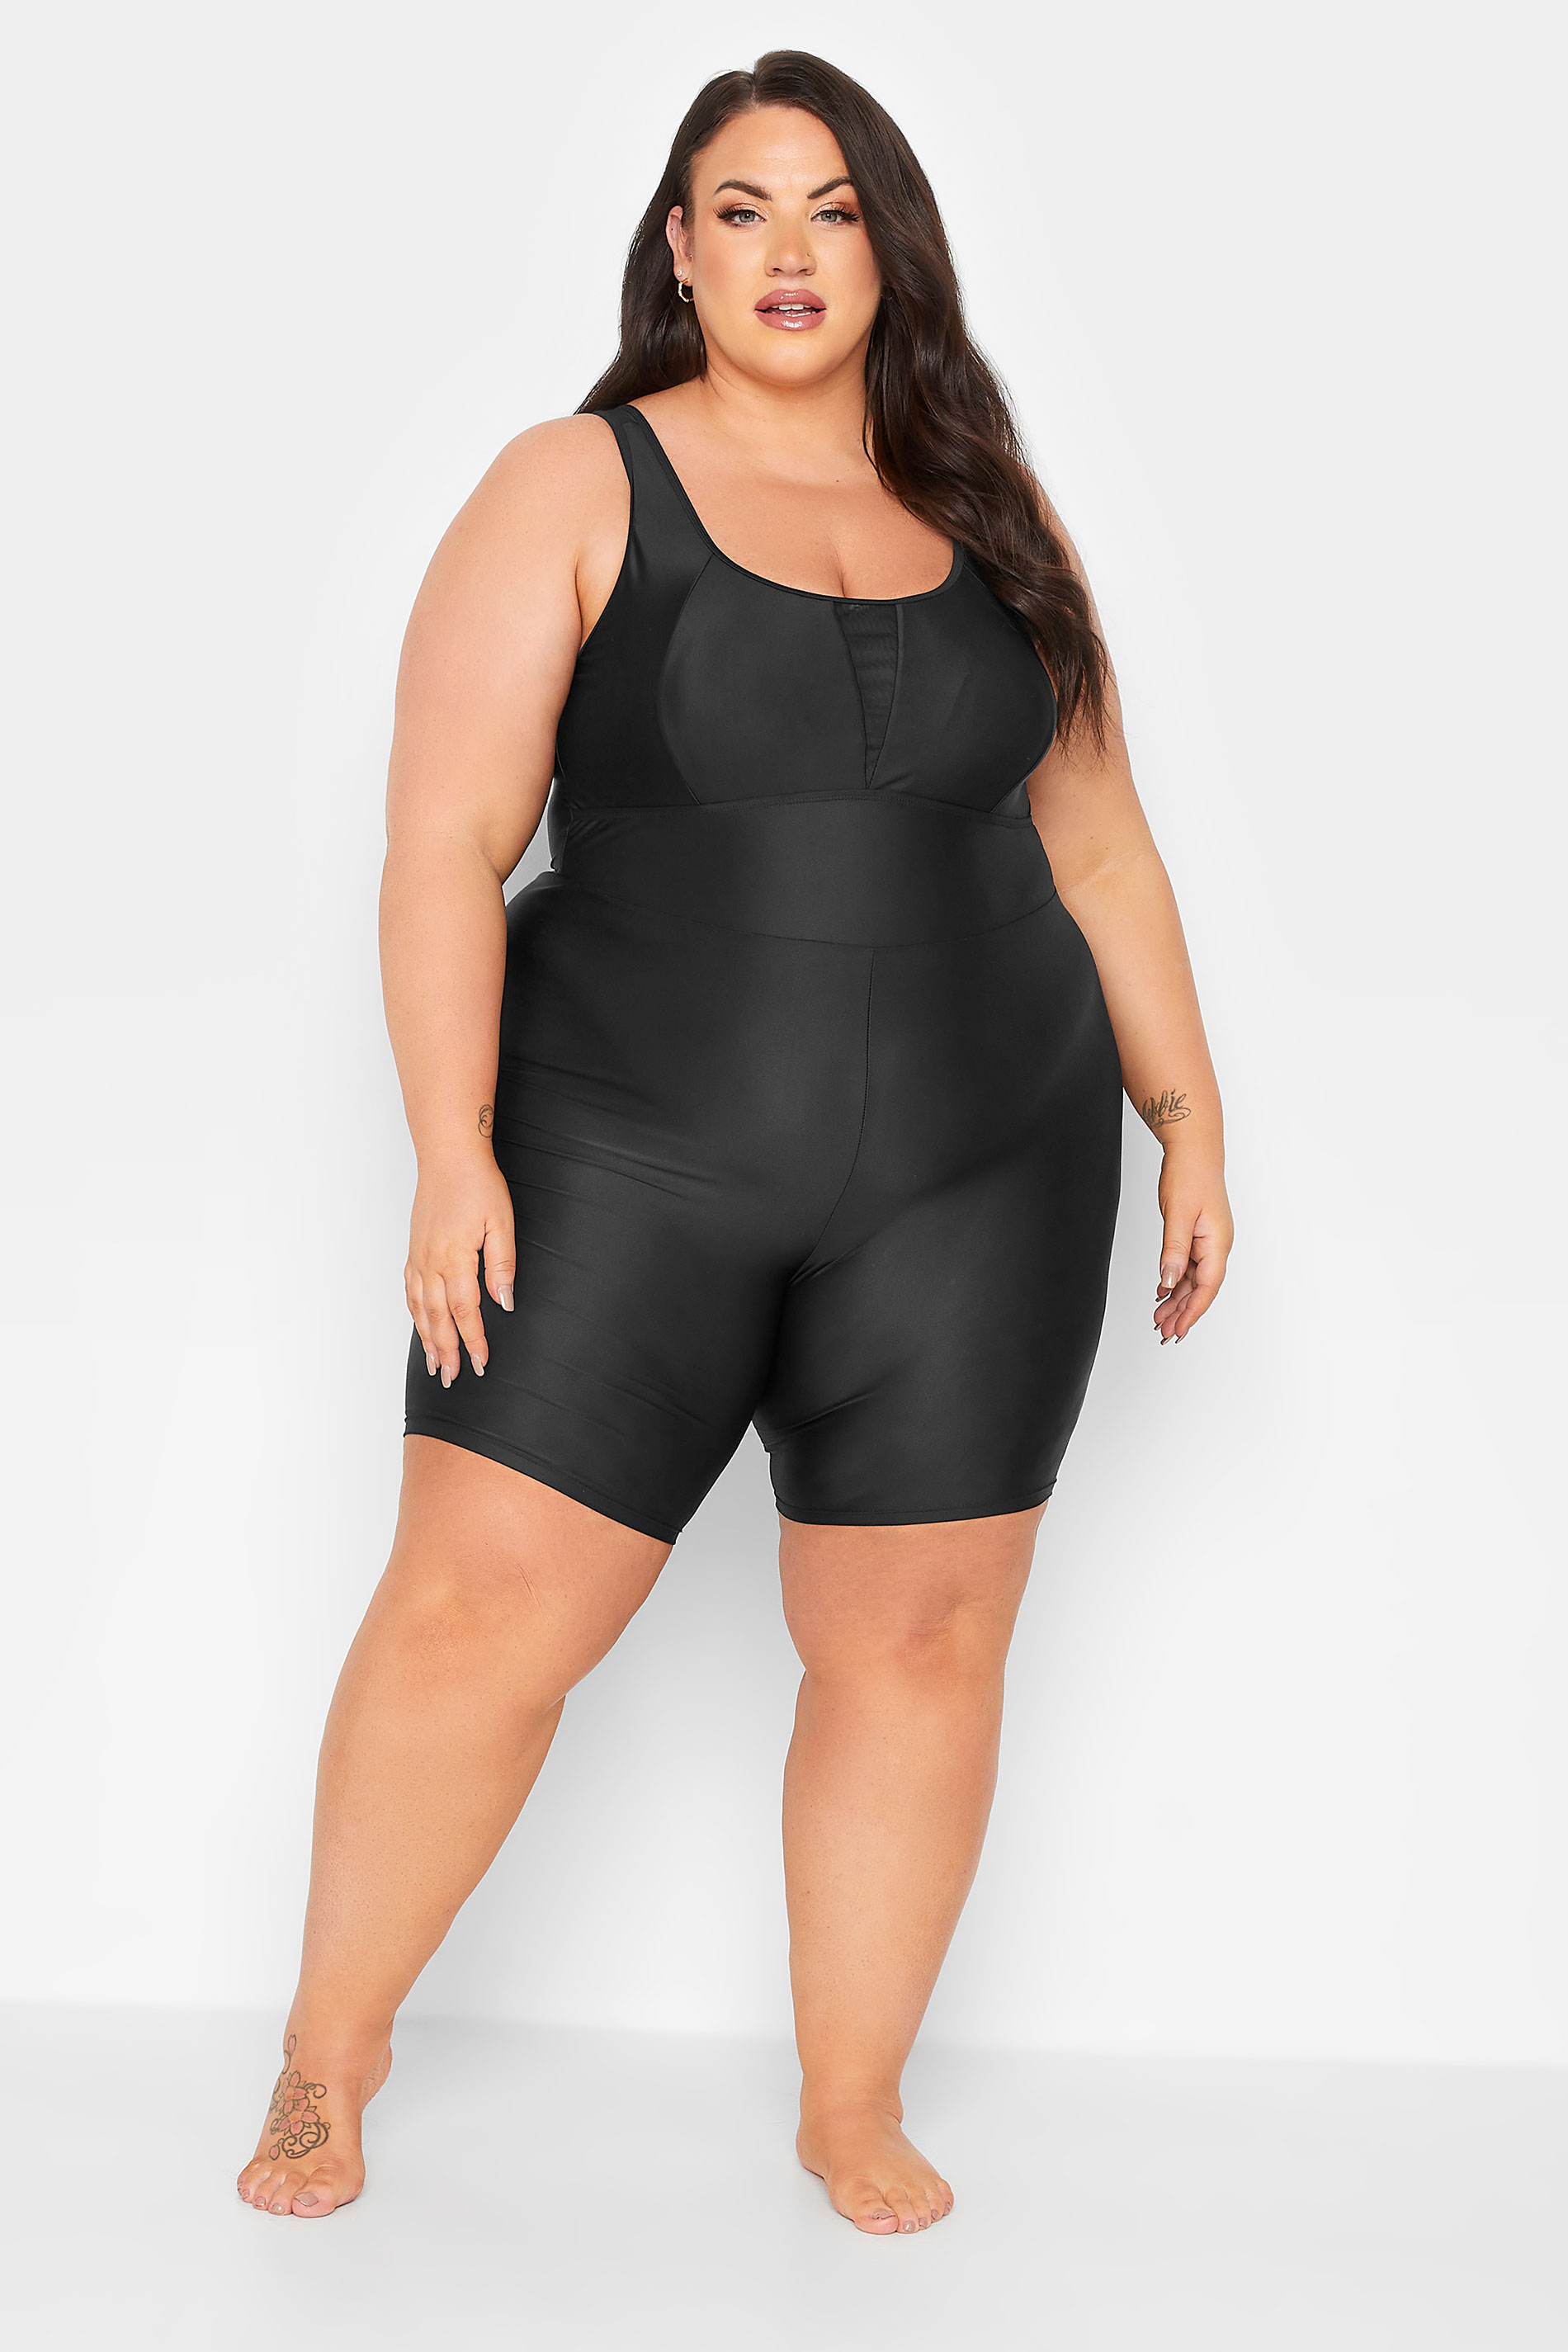 YOURS Plus Size Black Tummy Control Swim Unitard | Yours Clothing 2